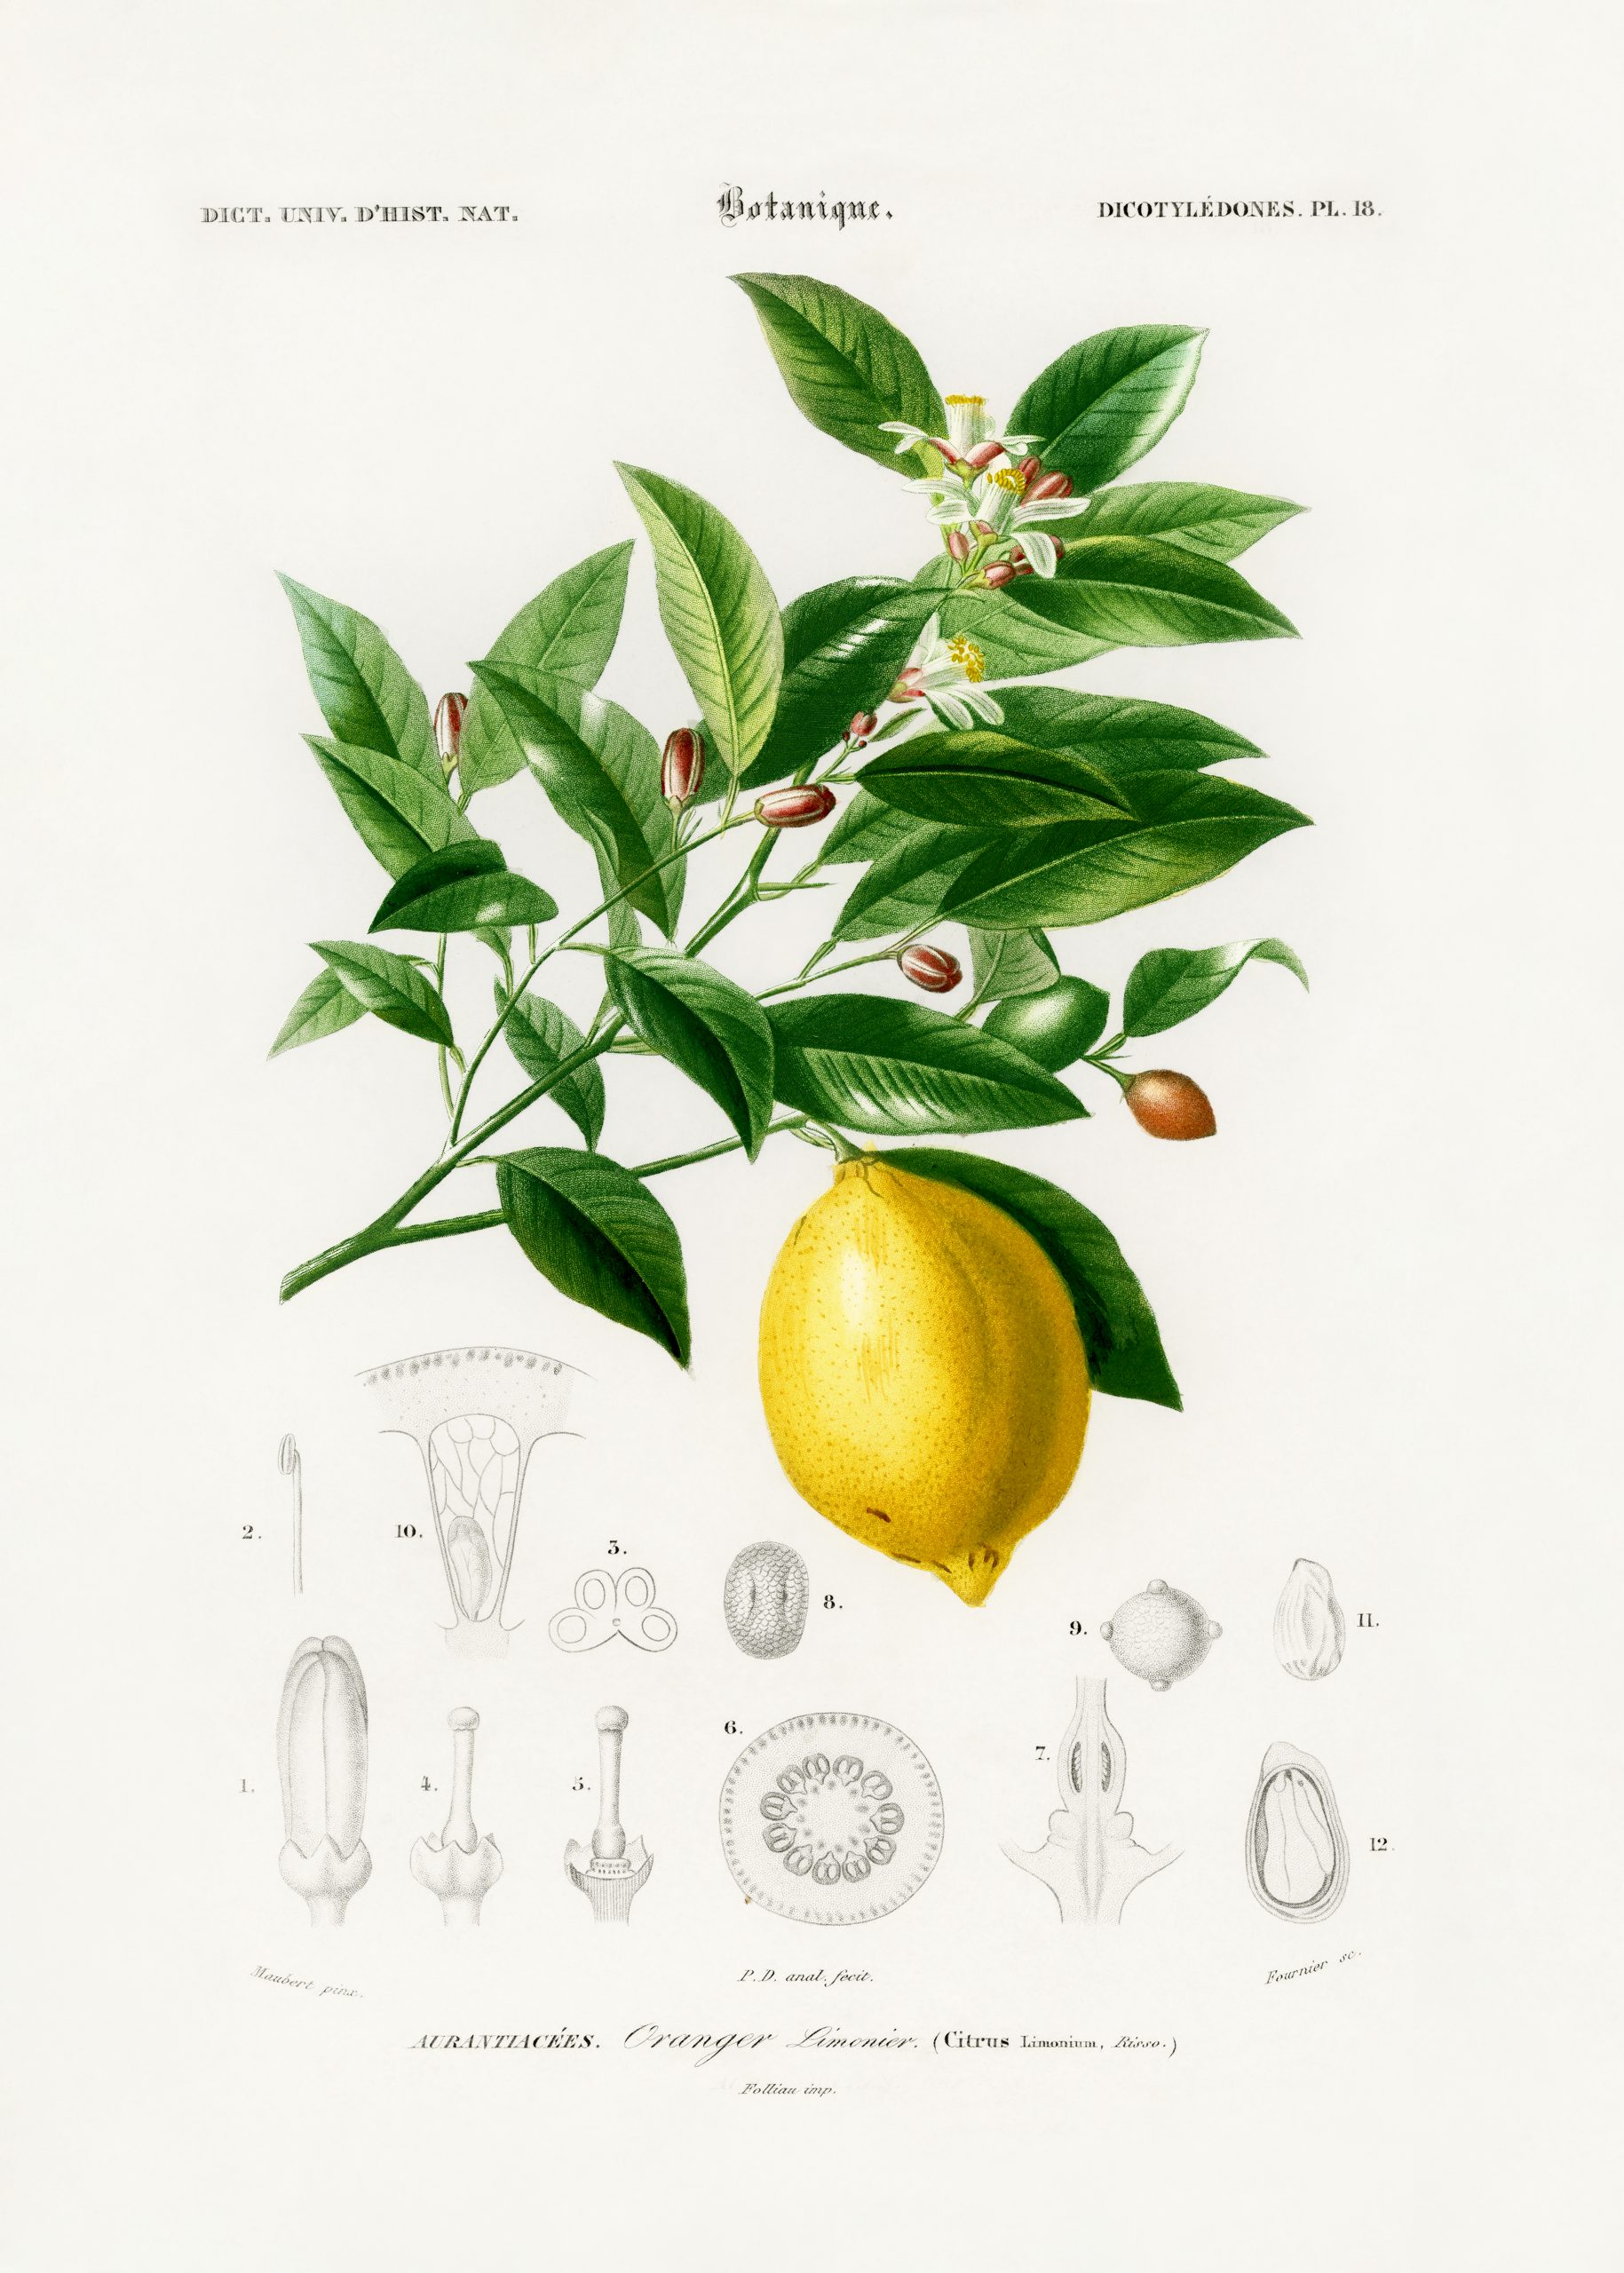 Lemon (Citrus Limonium) illustrated by Charles Dessalines D’ Orb